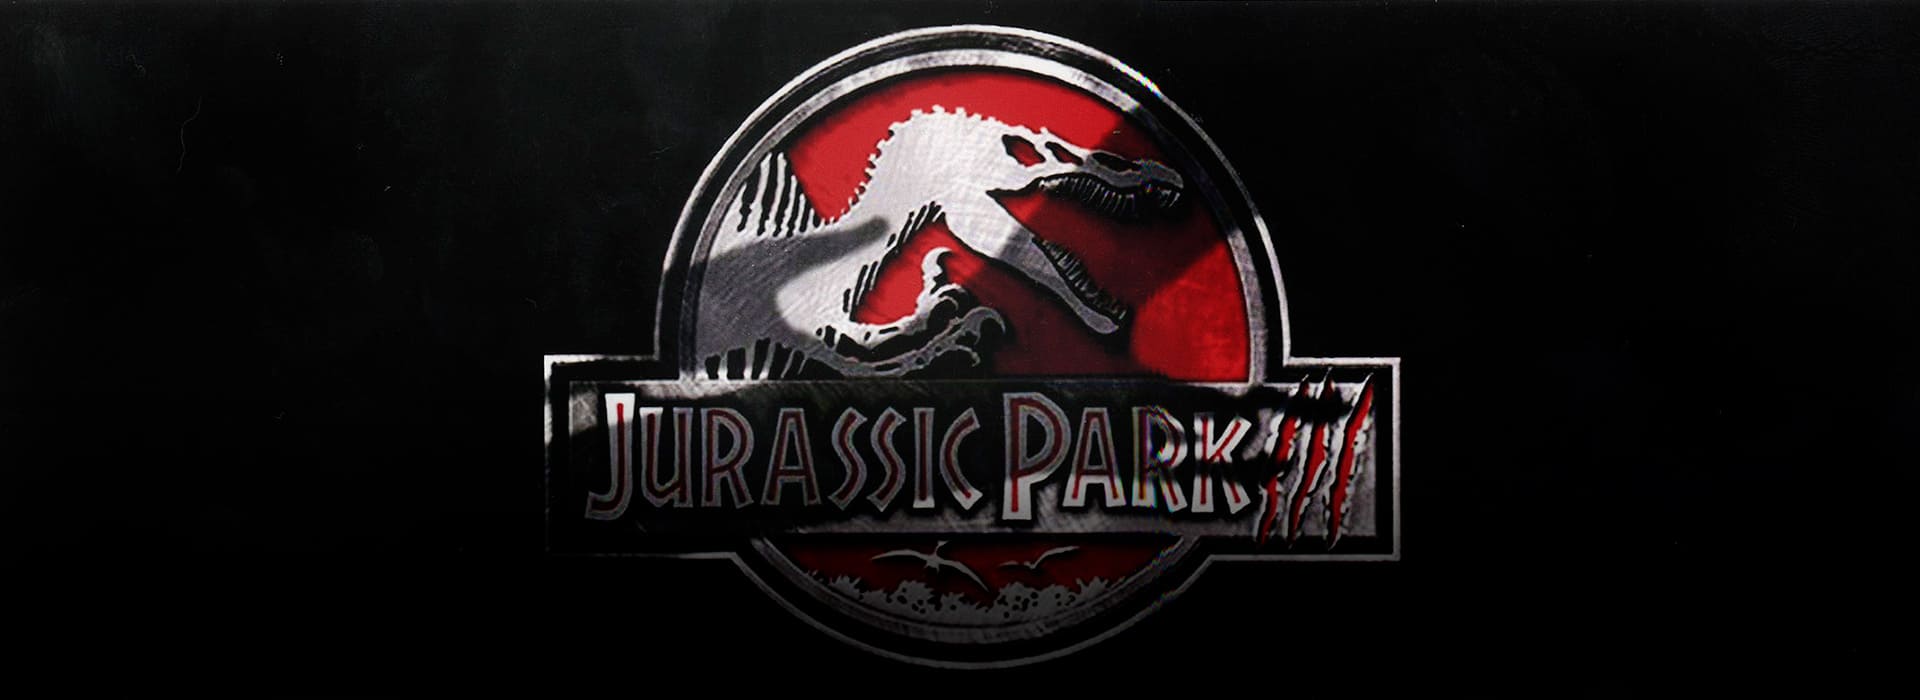 Jurassic Park 3 4K 2001 big poster